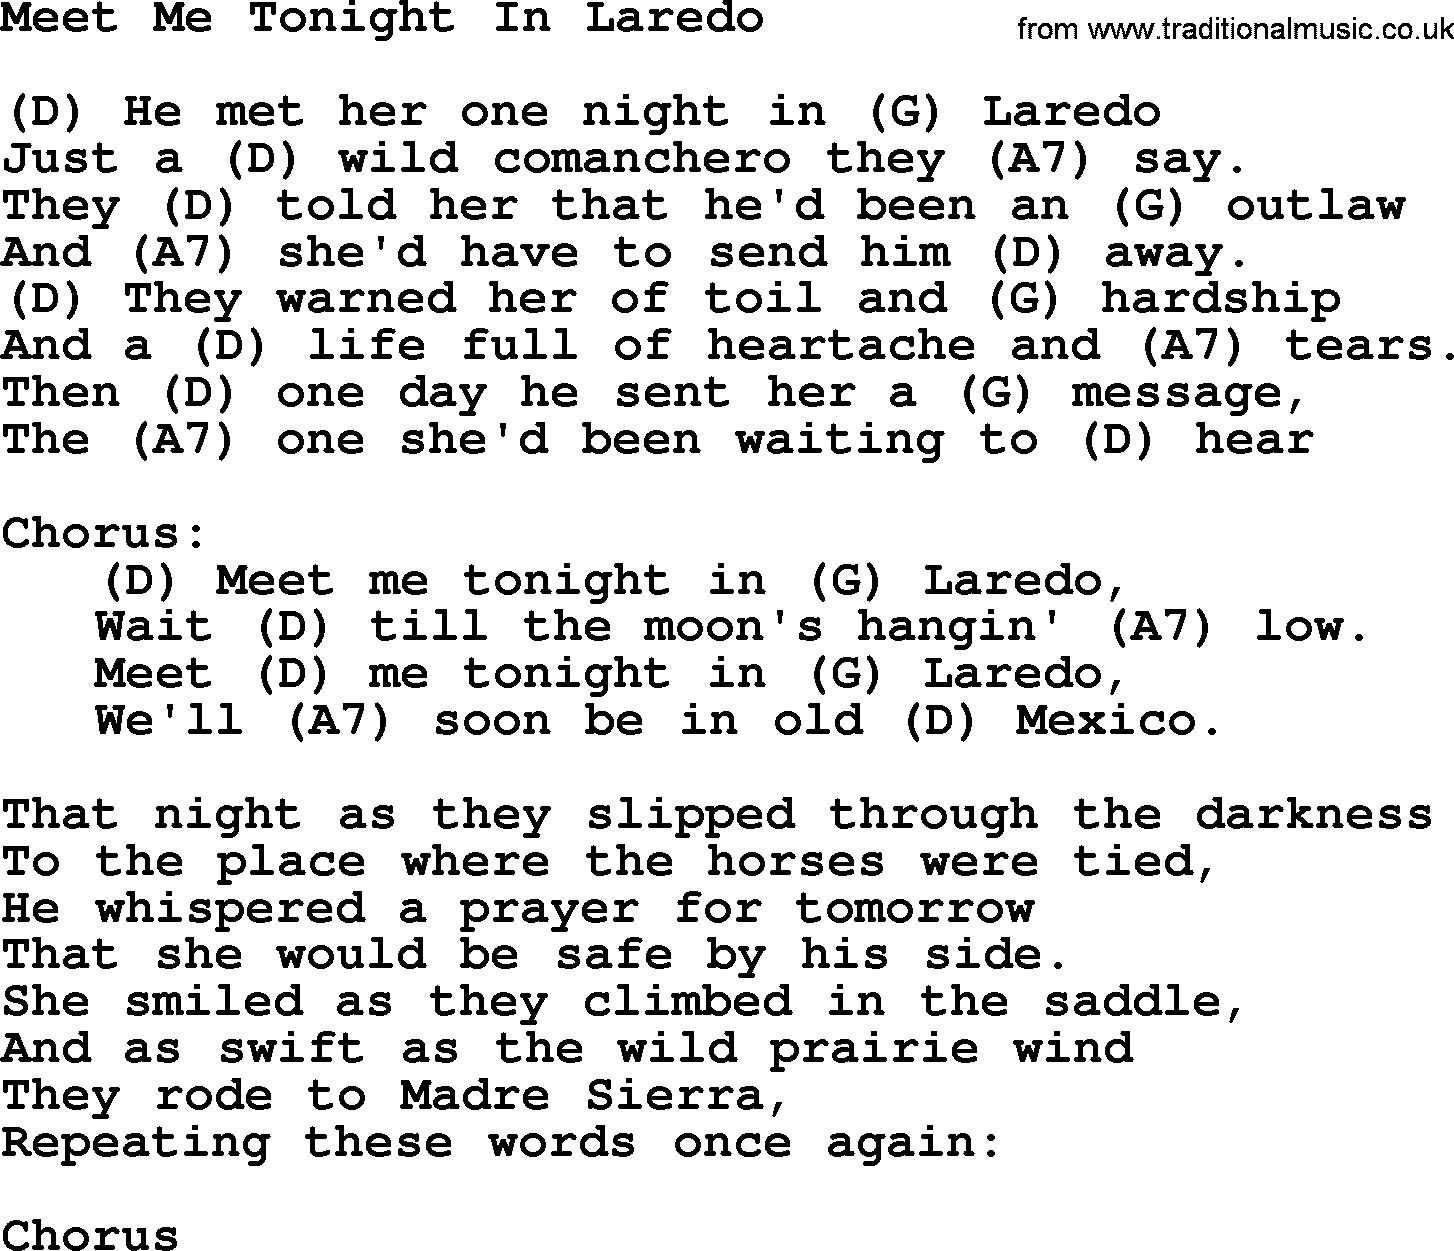 Marty Robbins song: Meet Me Tonight In Laredo, lyrics and chords